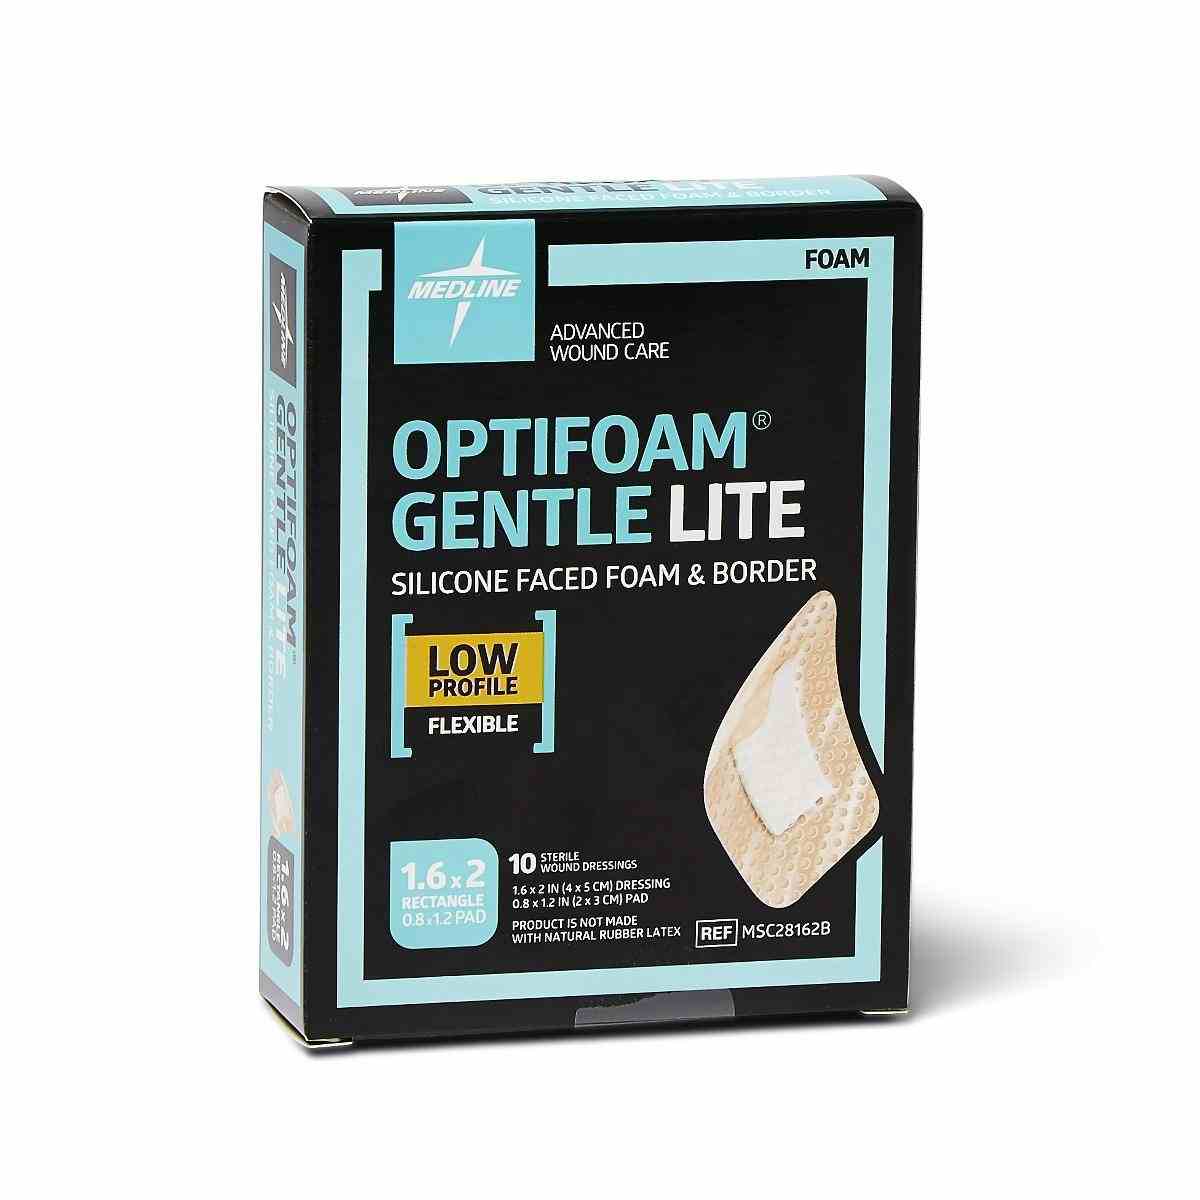 Medline Optifoam Gentle Lite Foam Dressing with Border, MSC28162BZ, 1.6" X 2" - Box of 10 